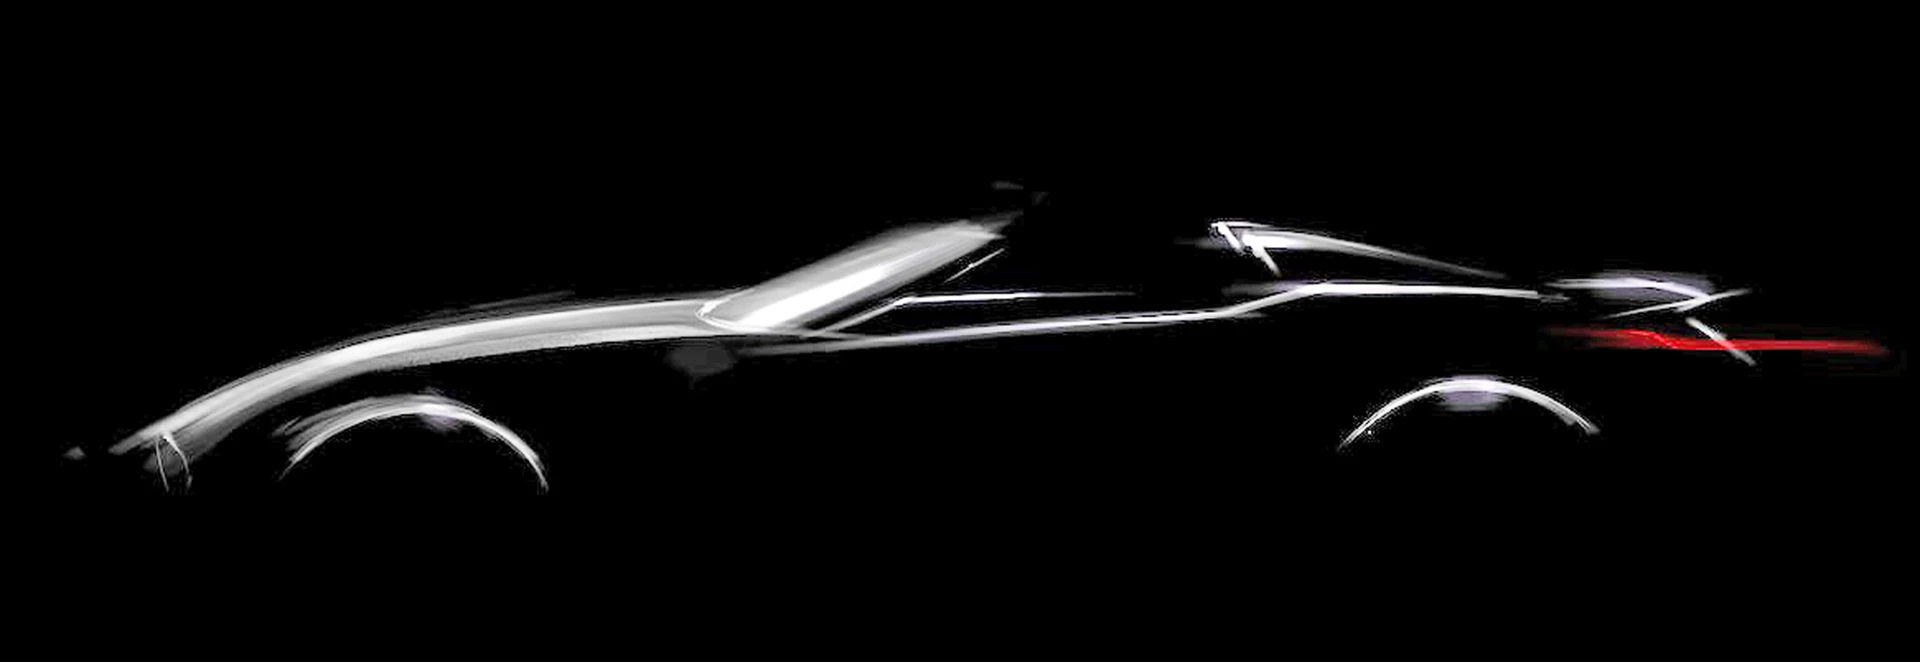 BMW releases new Z4 teaser image 